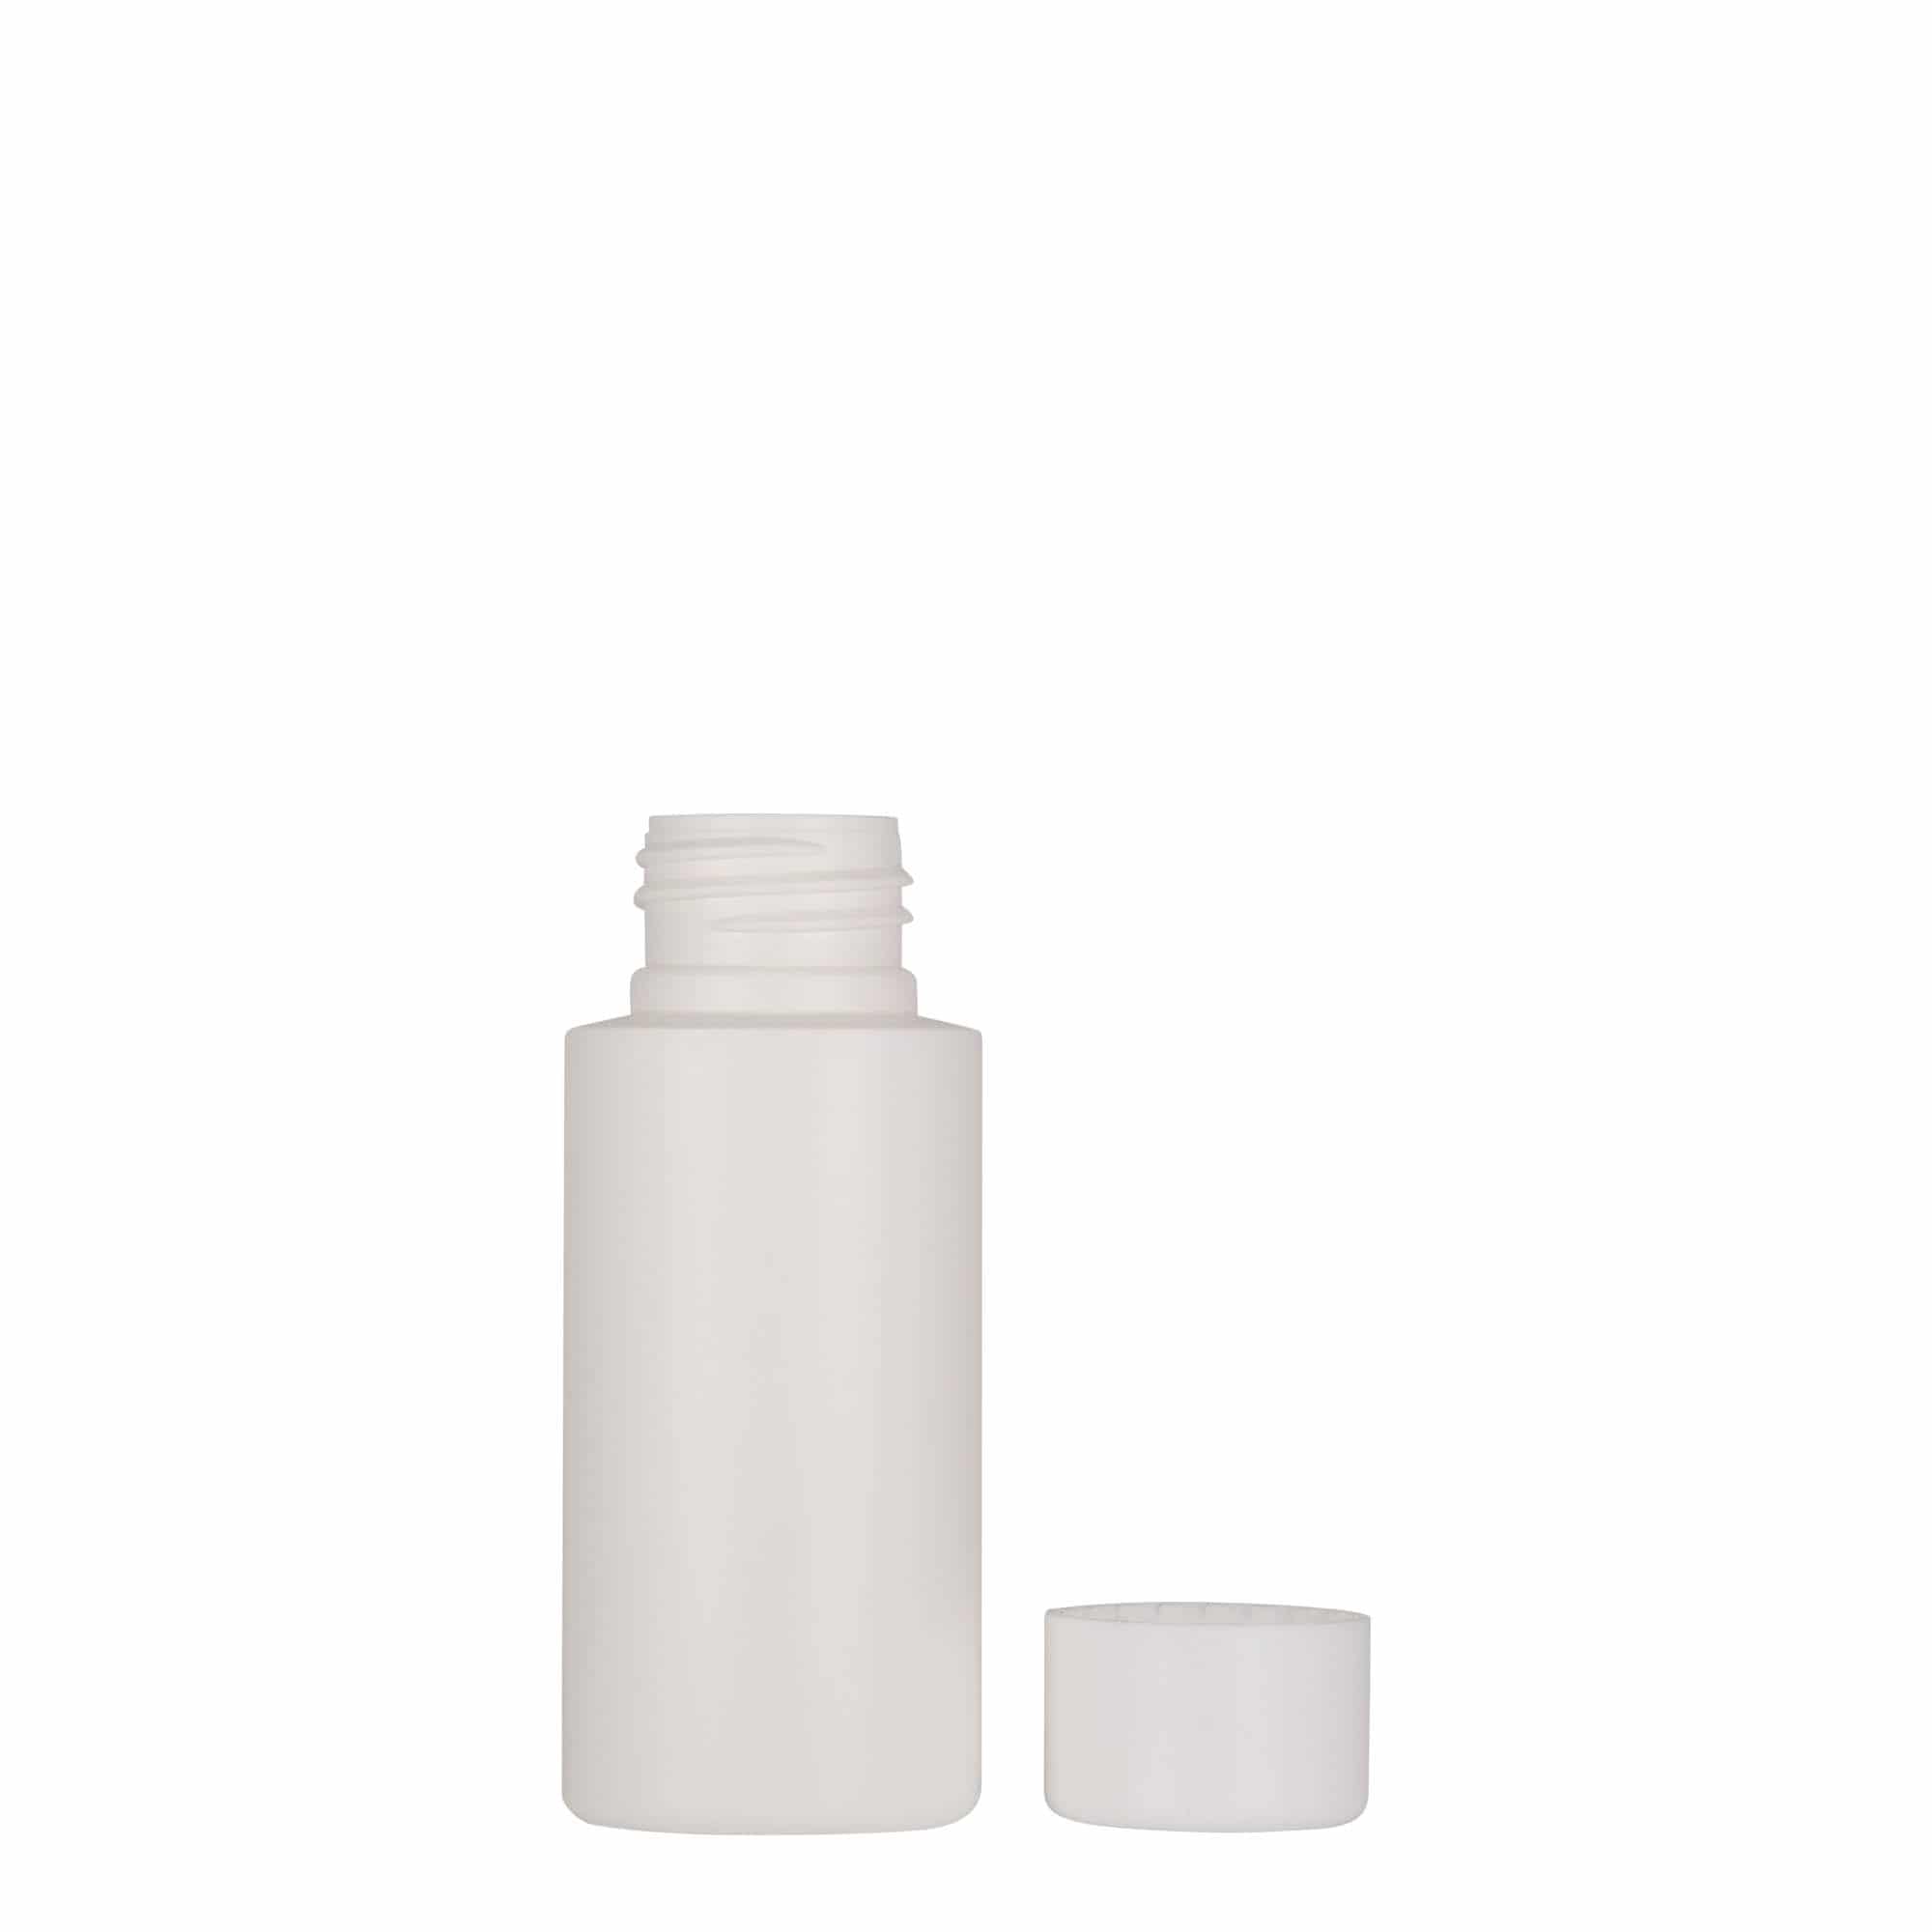 50 ml plastic bottle 'Pipe', HDPE, white, closure: GPI 24/410